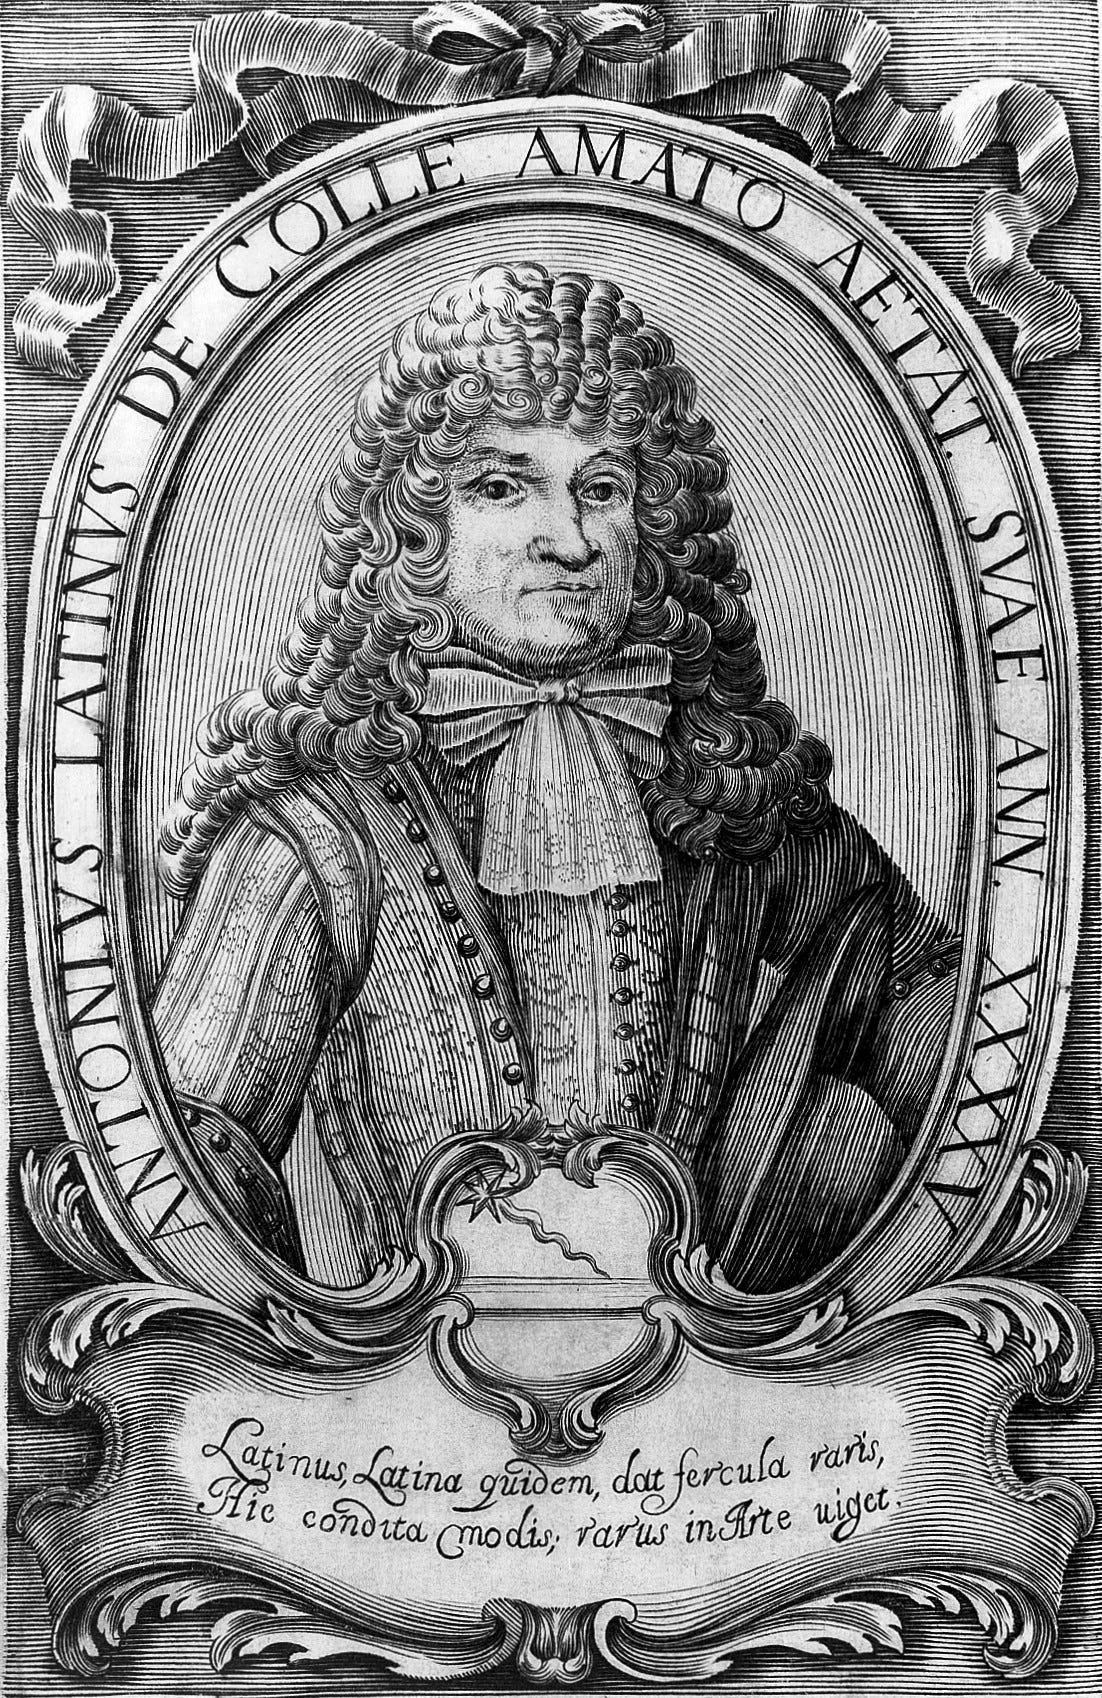 Antonio Latini - Wikipedia